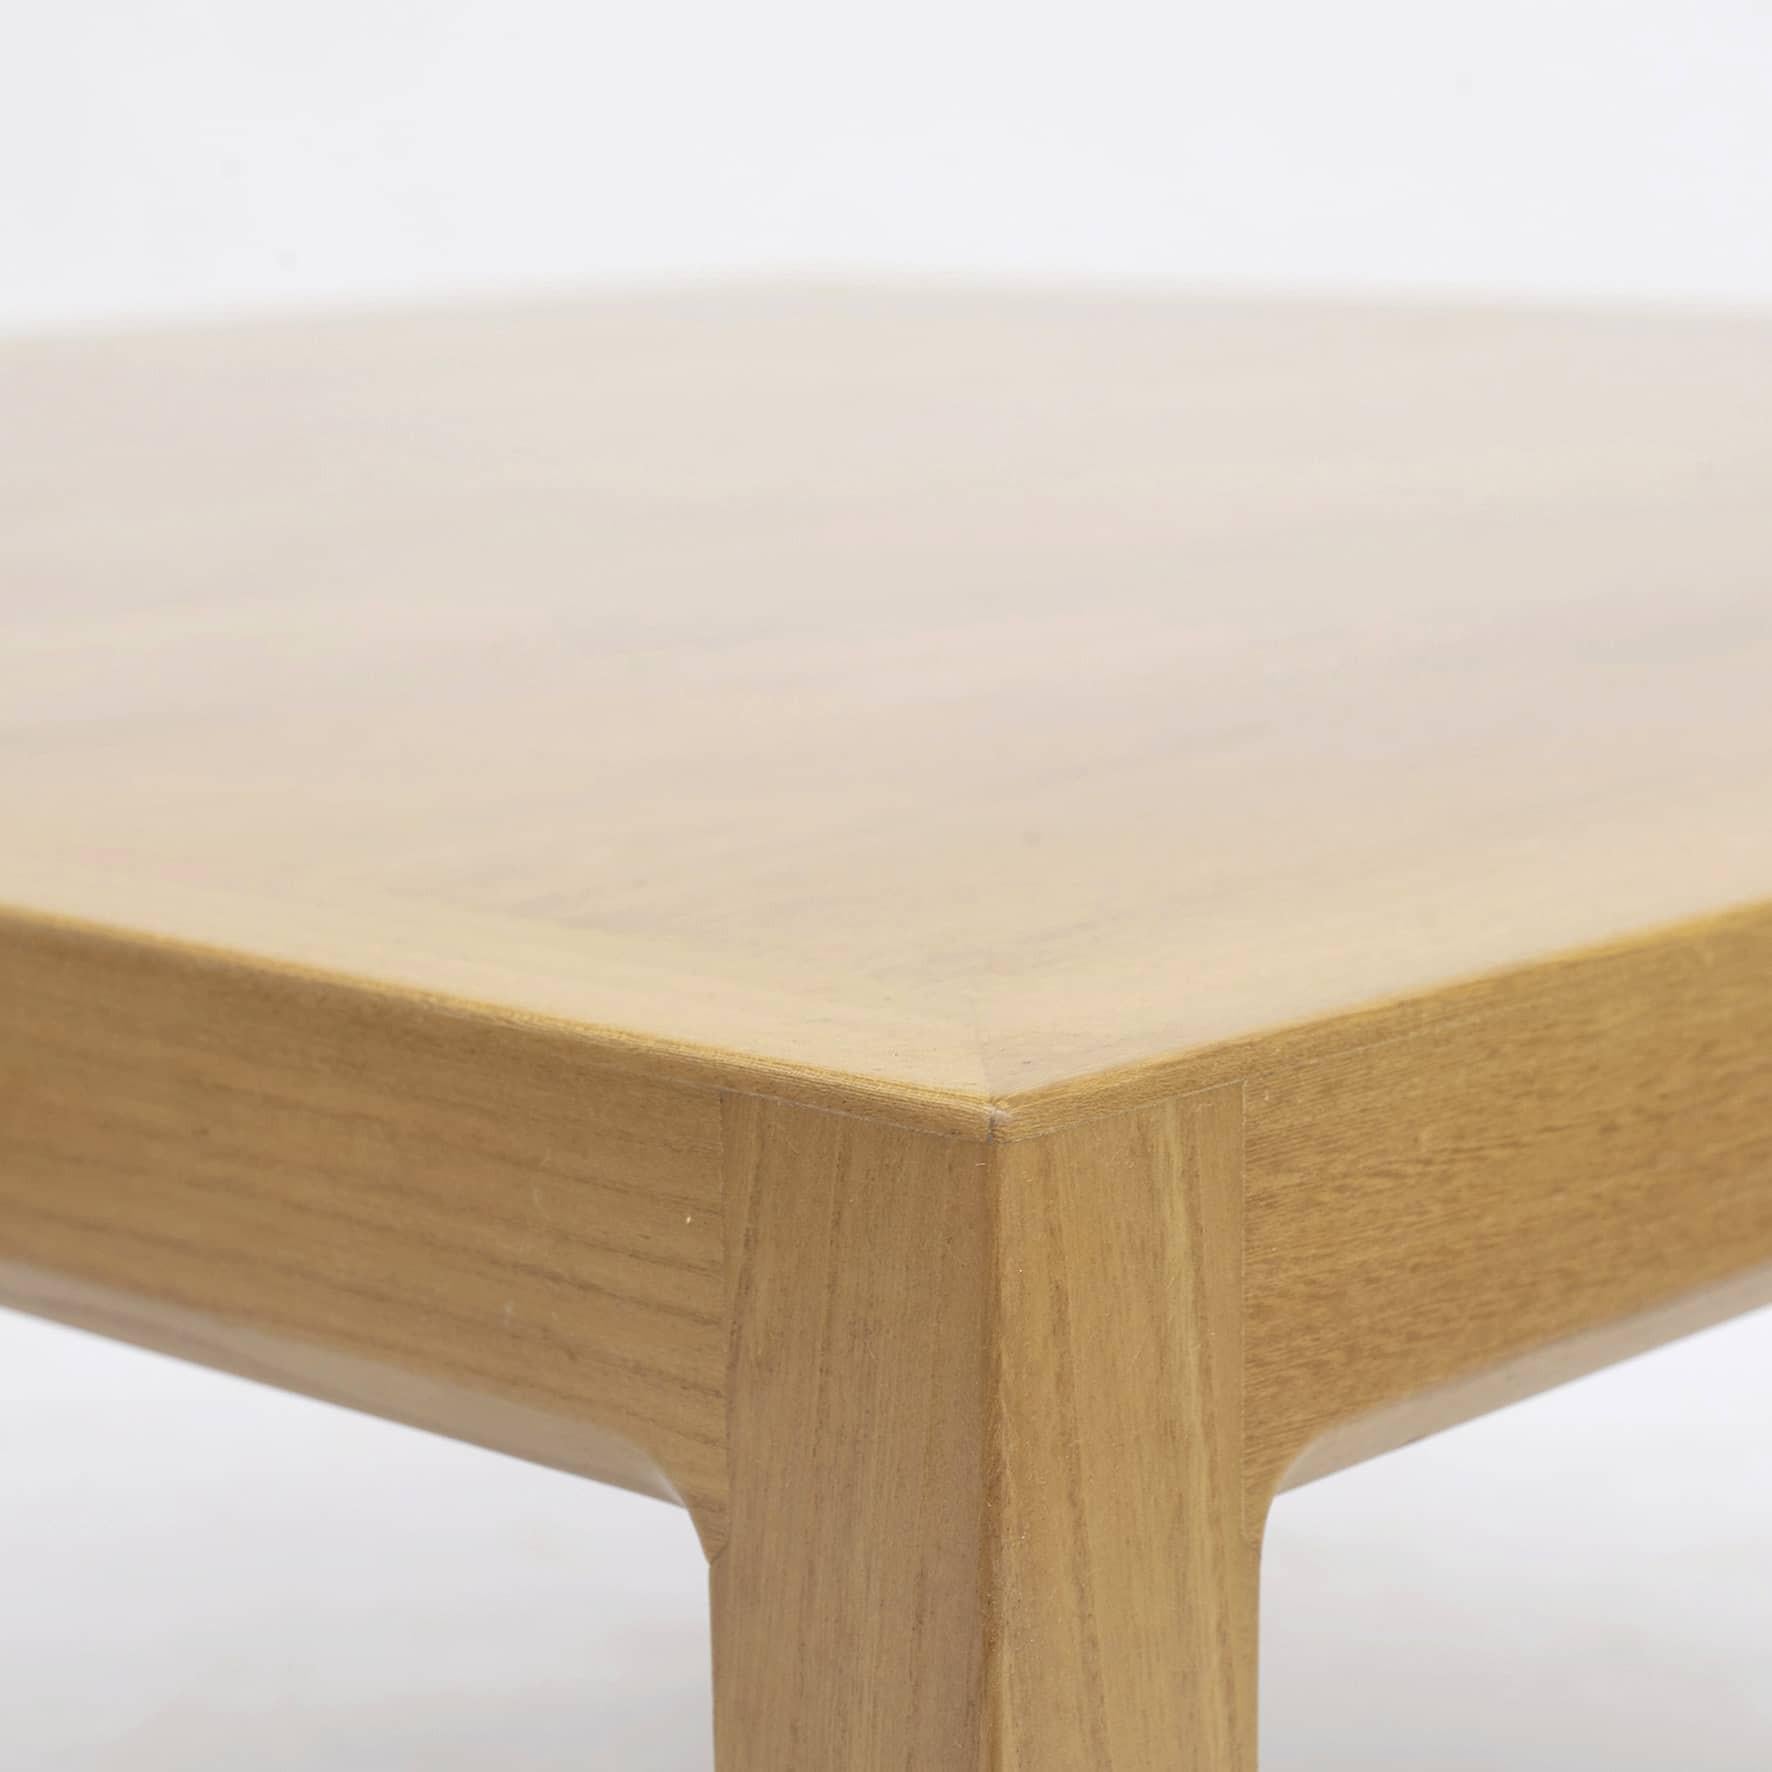 Bernt Petersen Ash Wood Coffee Table In Good Condition For Sale In Kastrup, DK